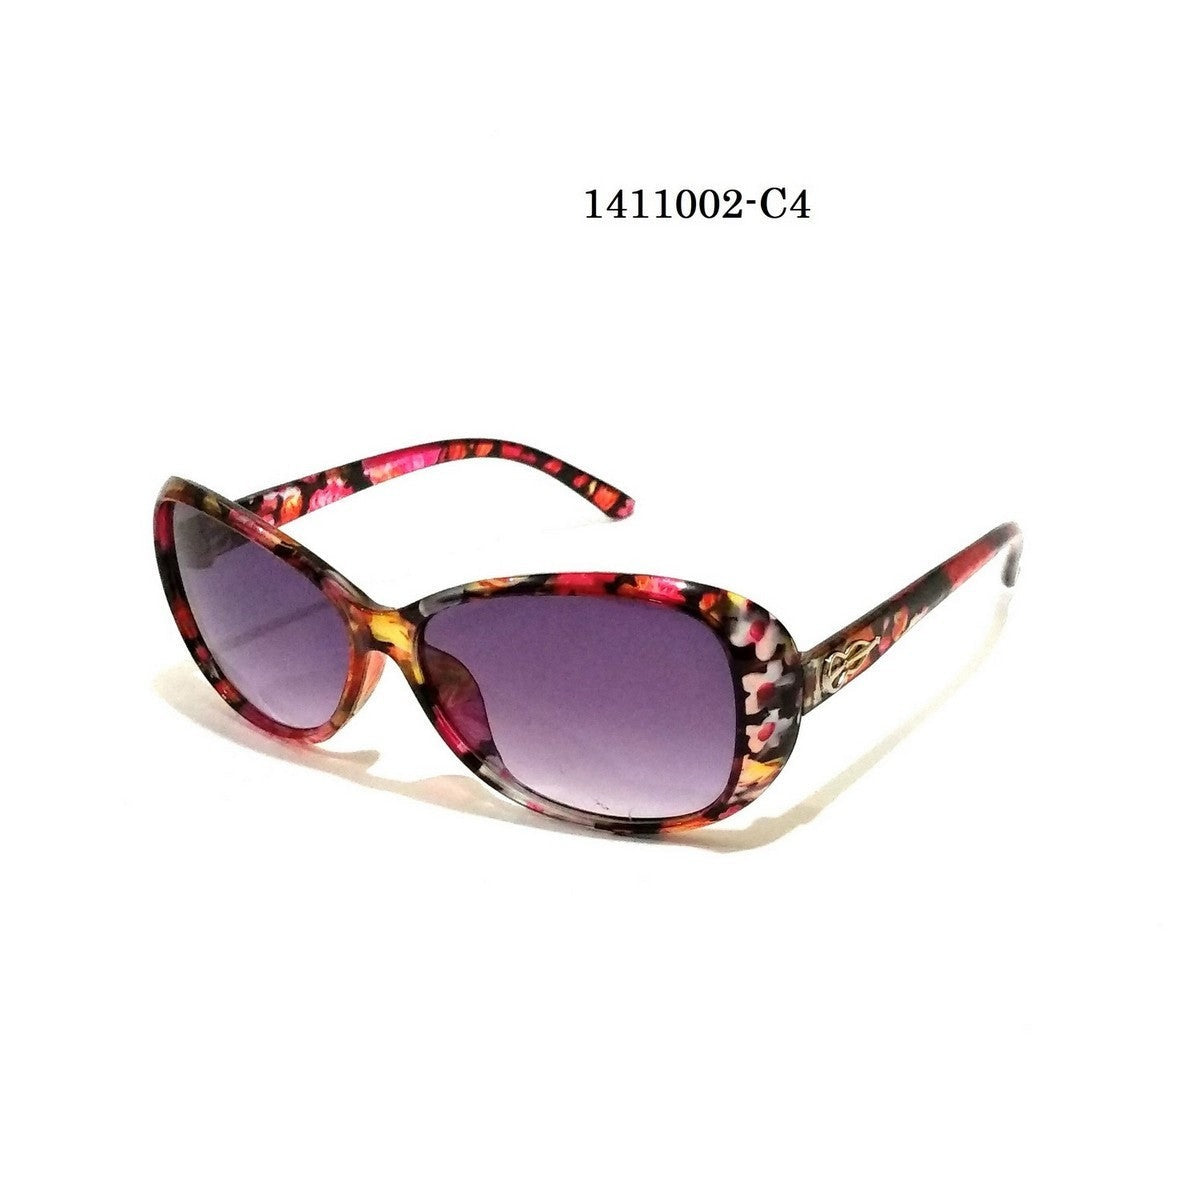 Floral Print Ladies Sunglasses for Women Model 1141002C4 - Glasses India Online